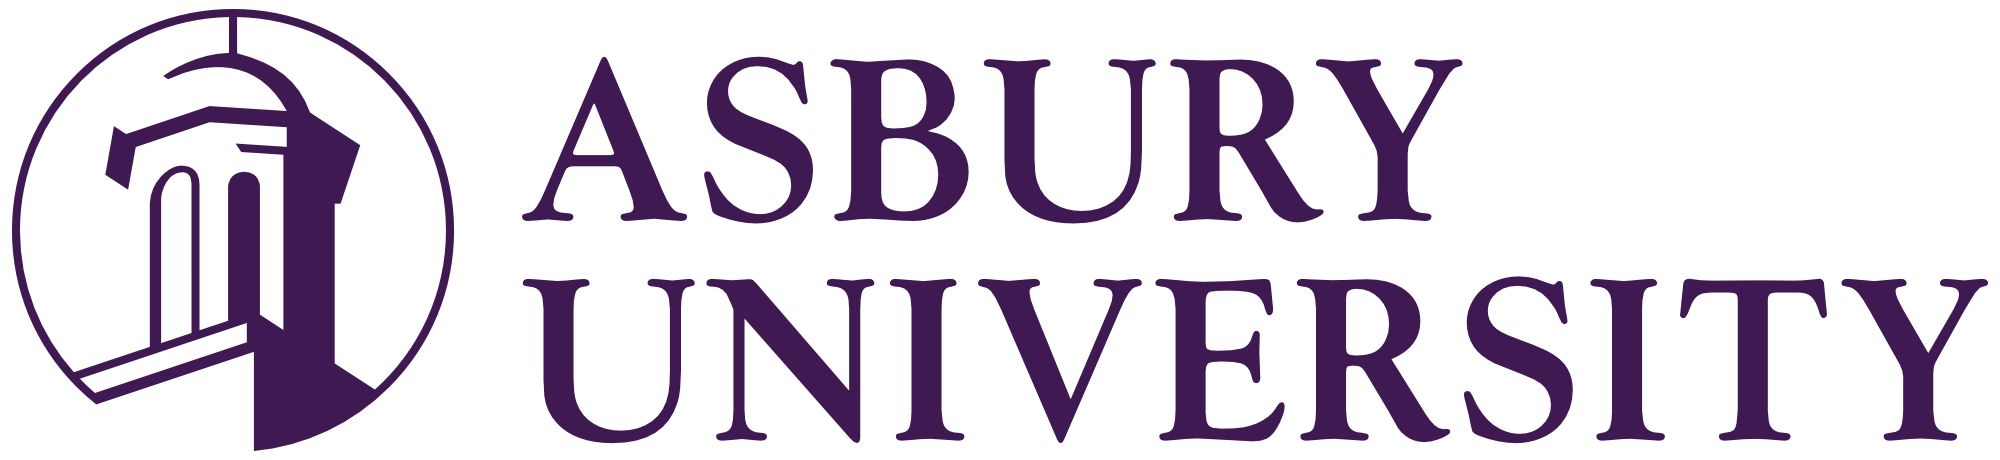 Asbury University Logo Config 3